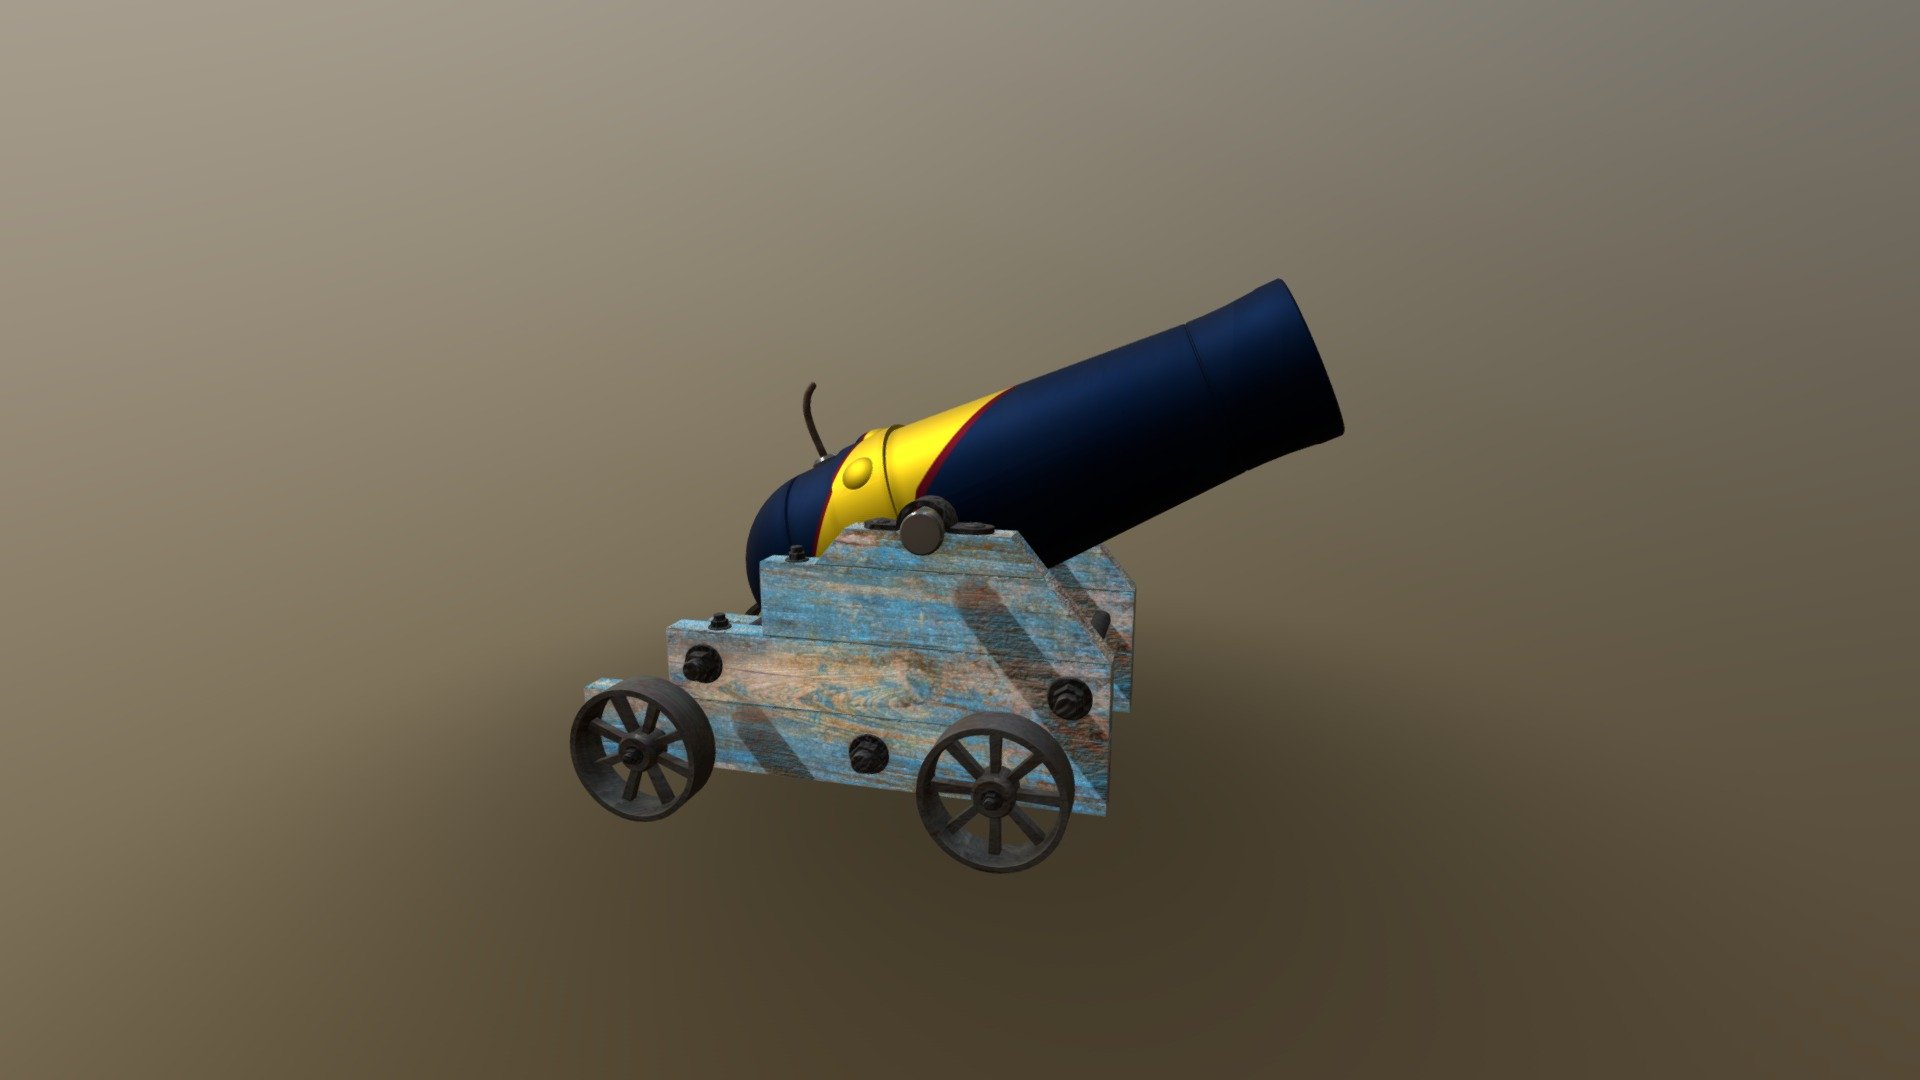 little circus cannon.
Petit canon de cirque 3d model